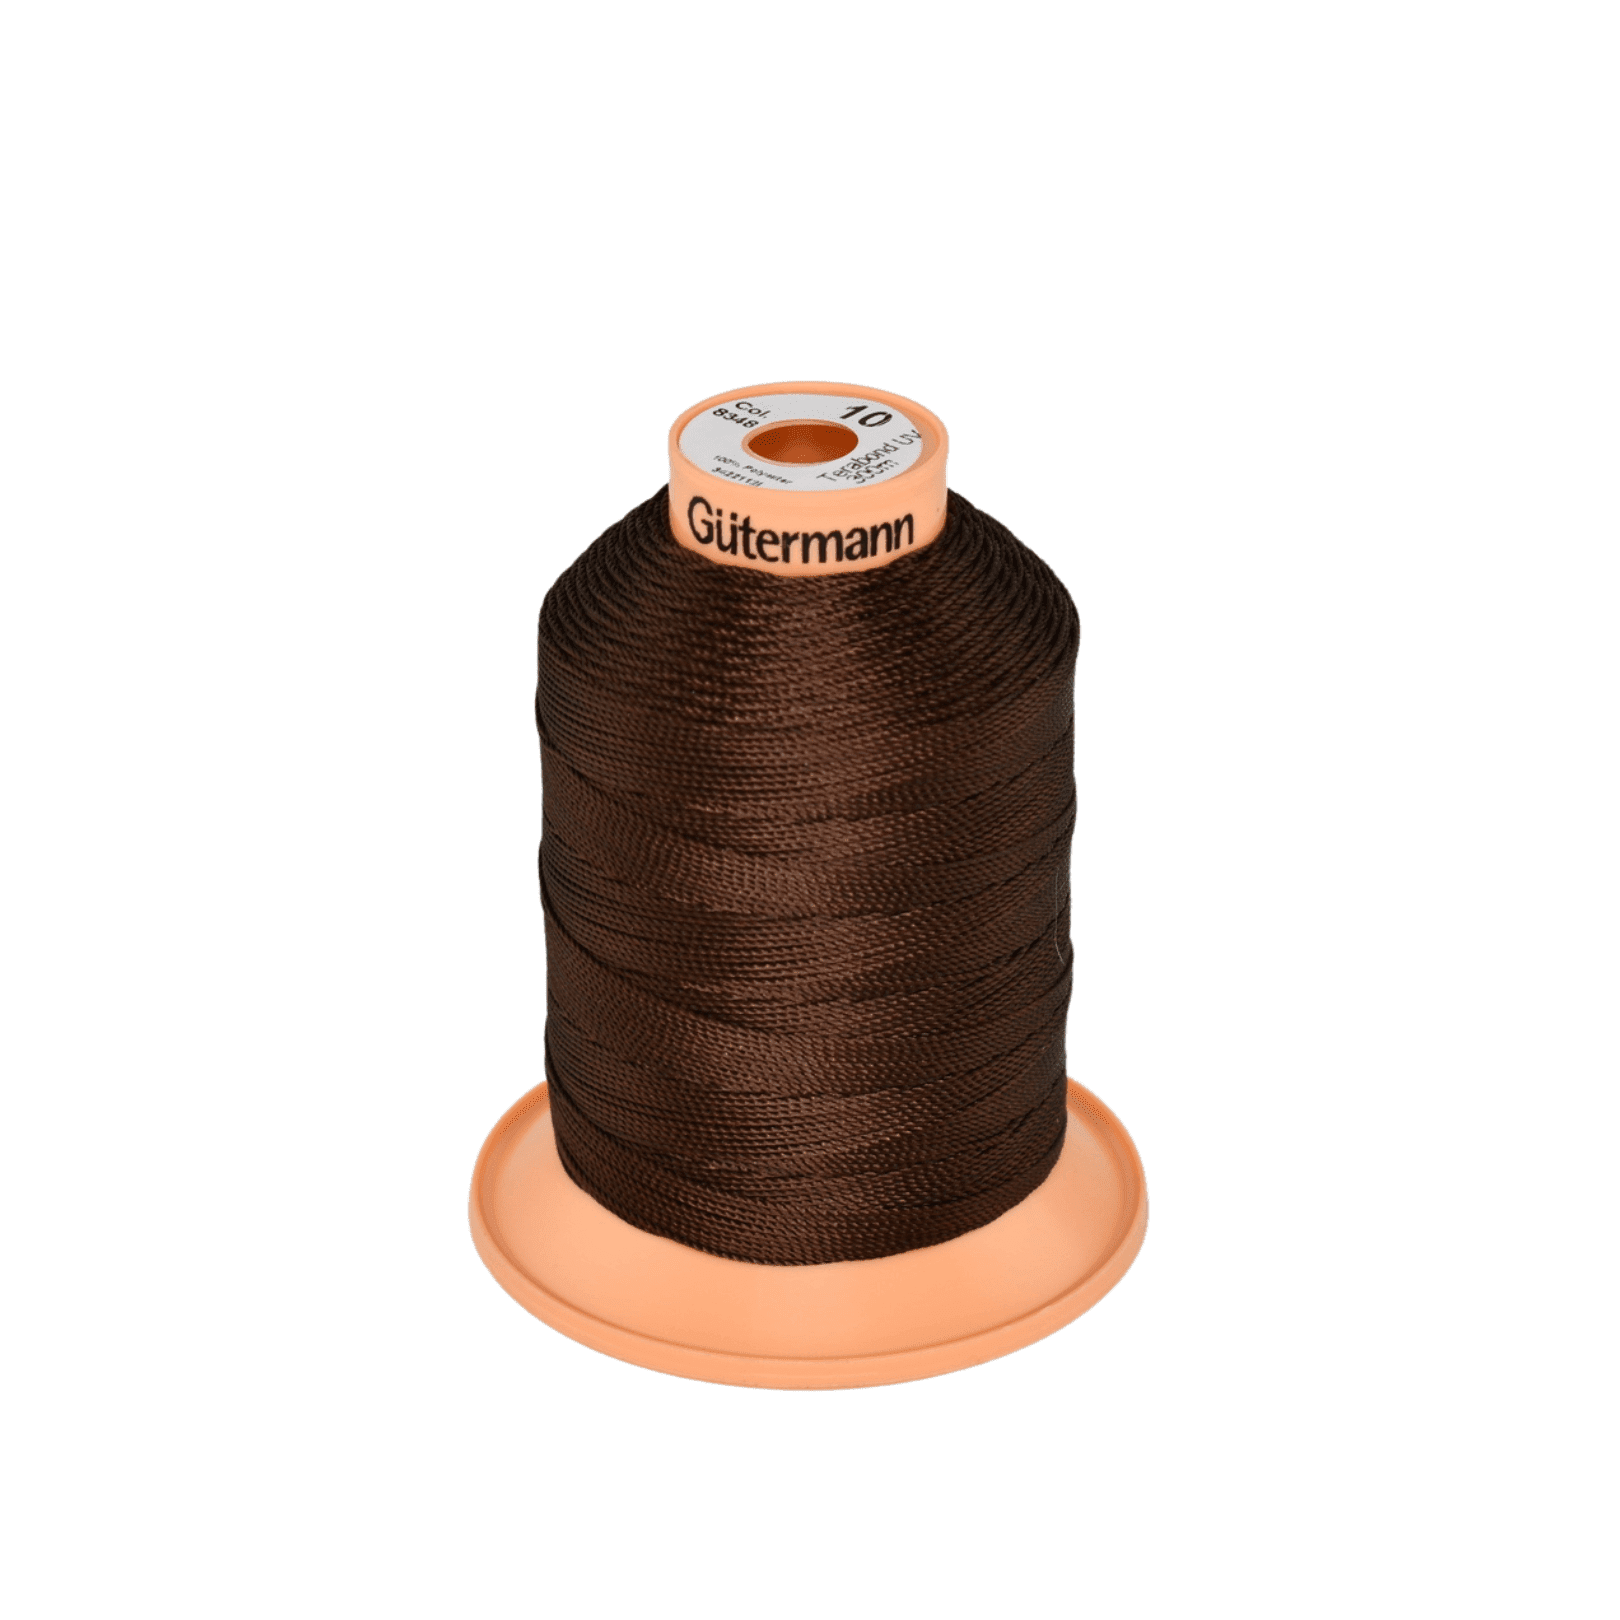 Brown Gutermann Terabond 10 UV stabilised Sewing Thread 300m Grey